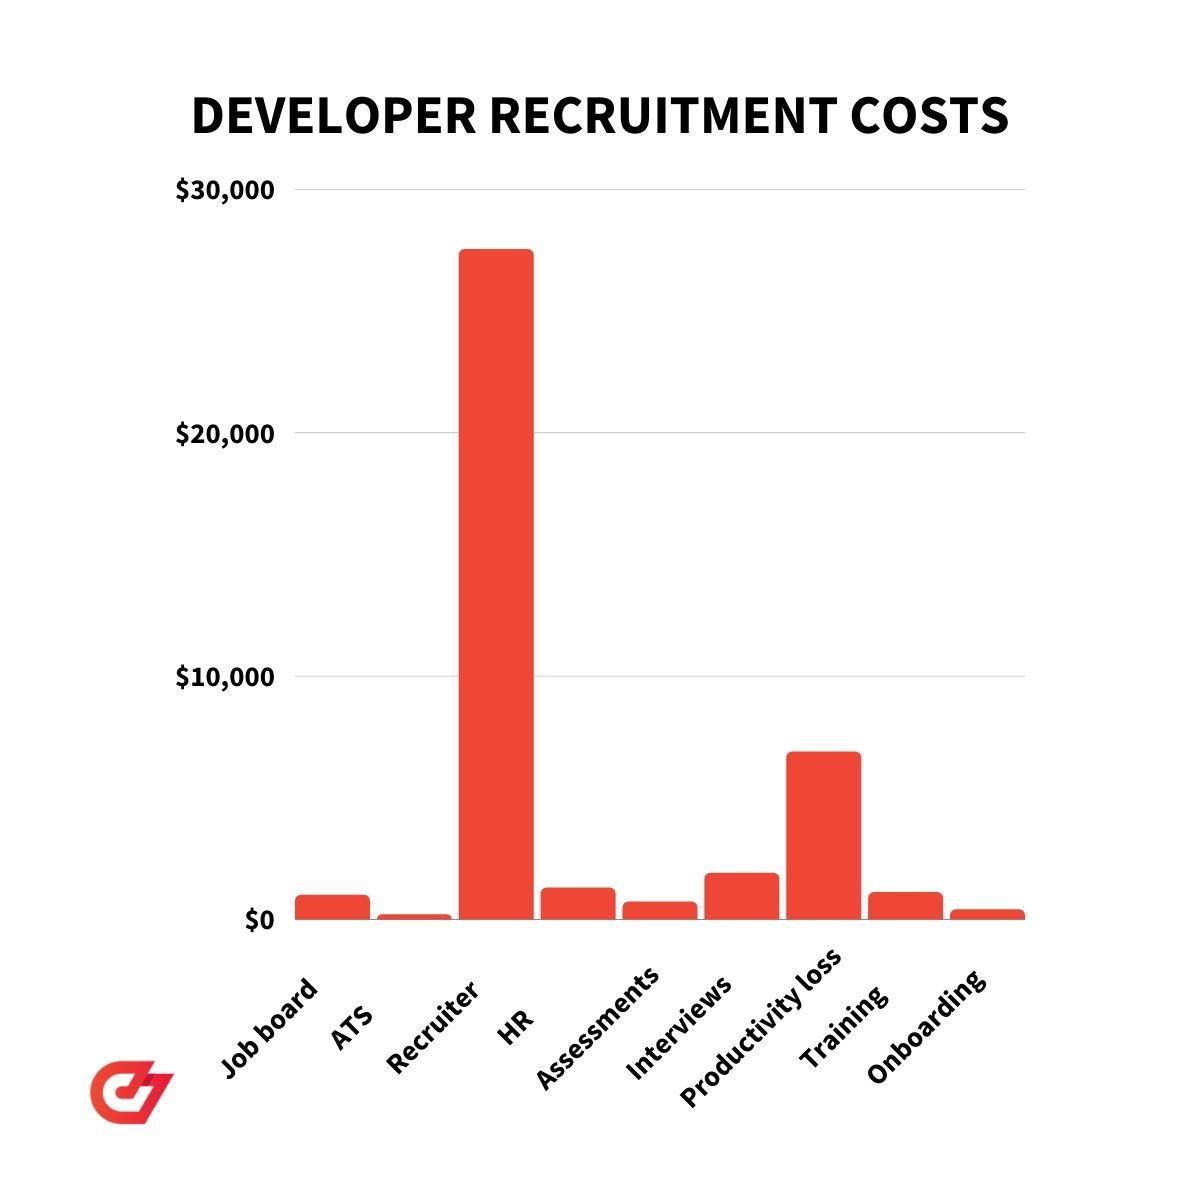 A breakdown of developer recruitment costs